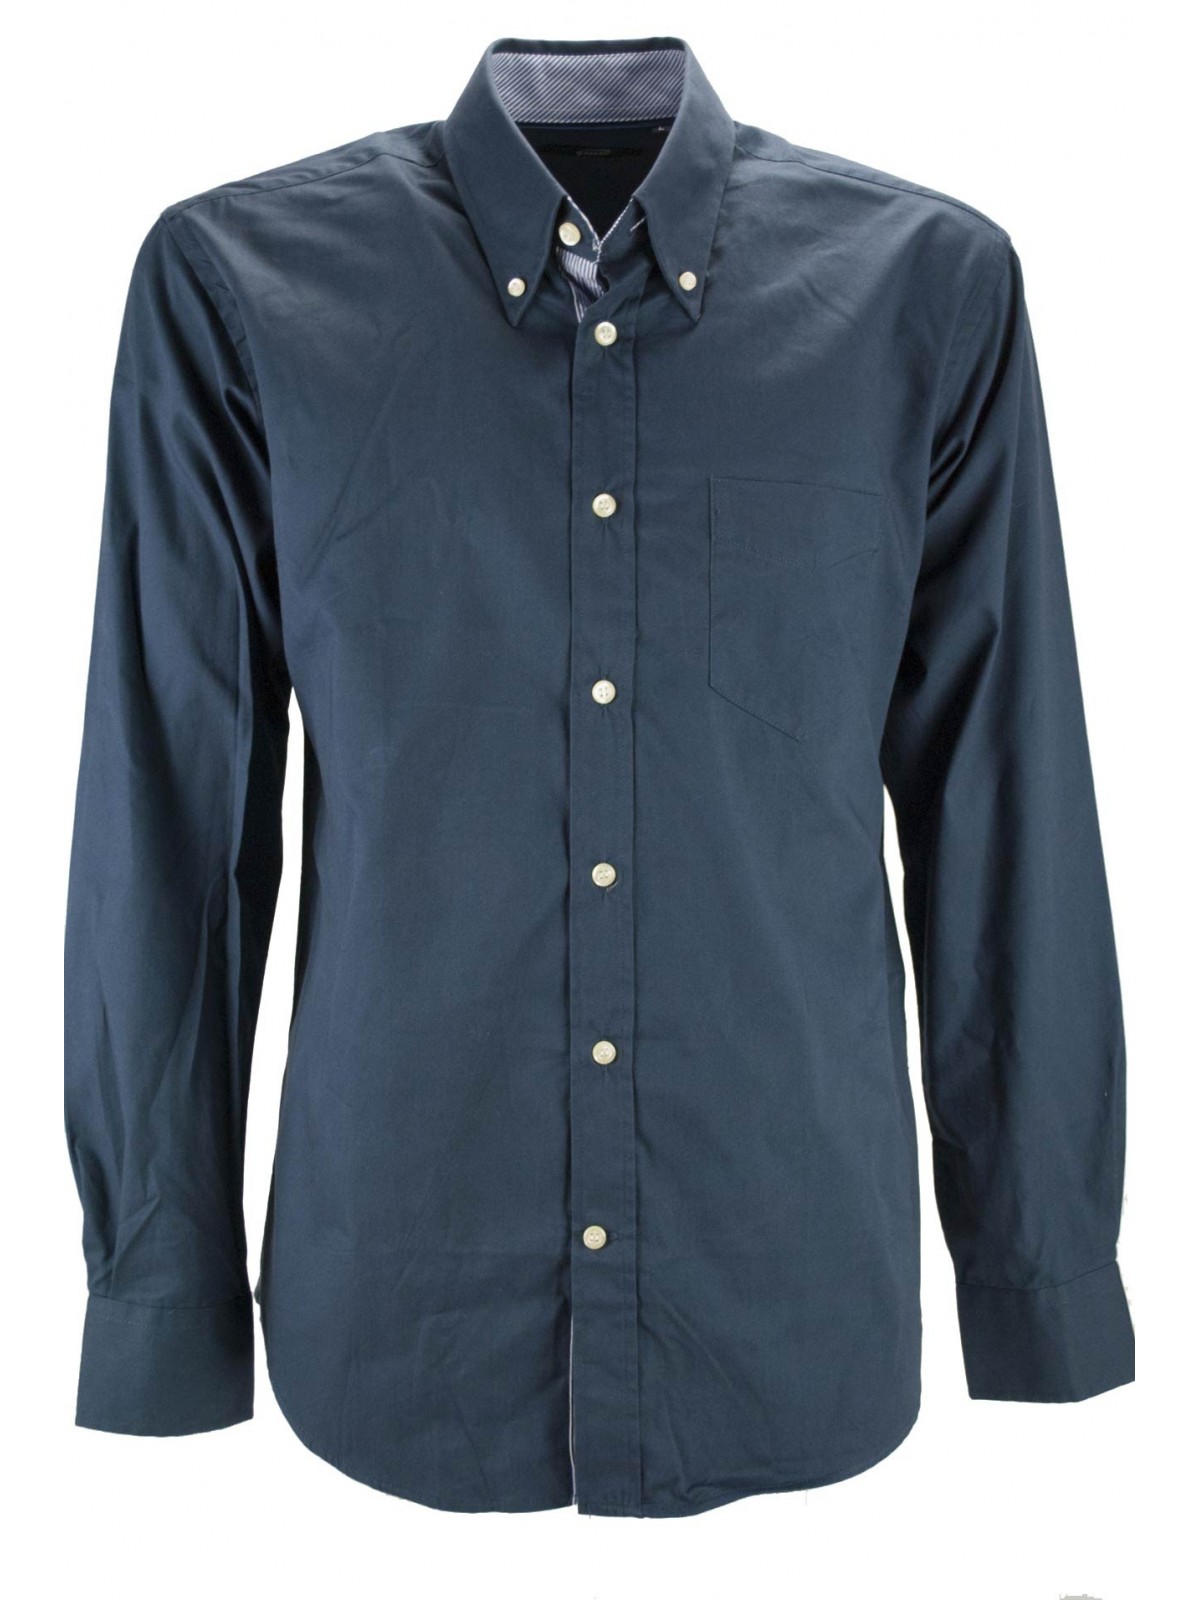 Dark Blue Twill Button Down Man Shirt inside collar with light blue stripes - Grino